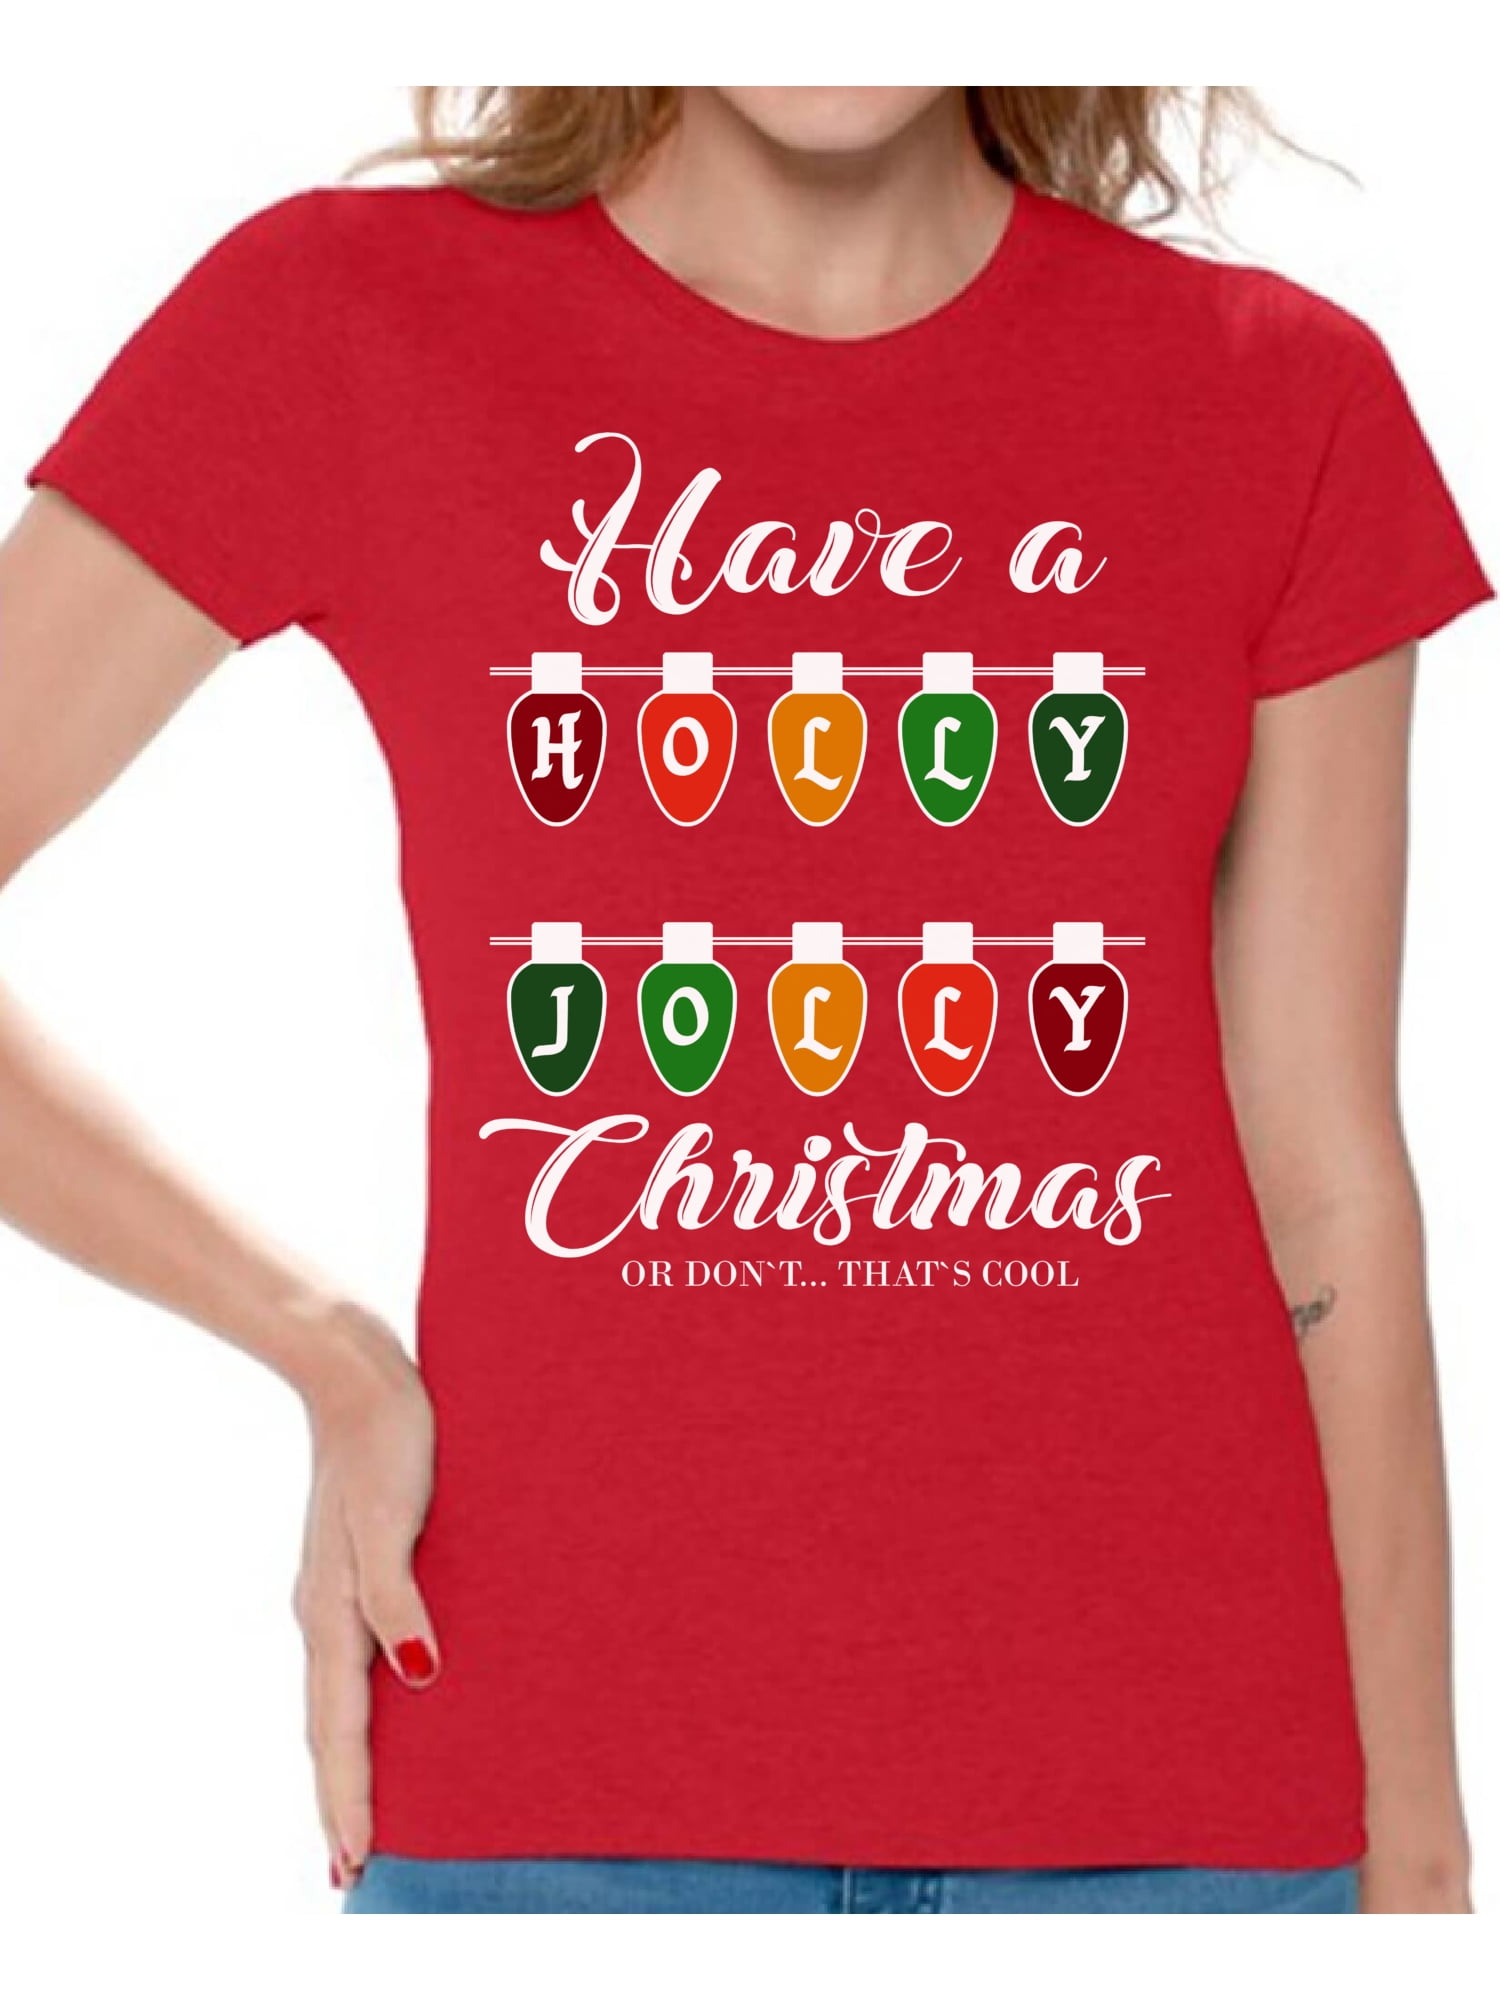 Awkward Styles Ugly Christmas Shirts for Women Xmas Holly Jolly ...